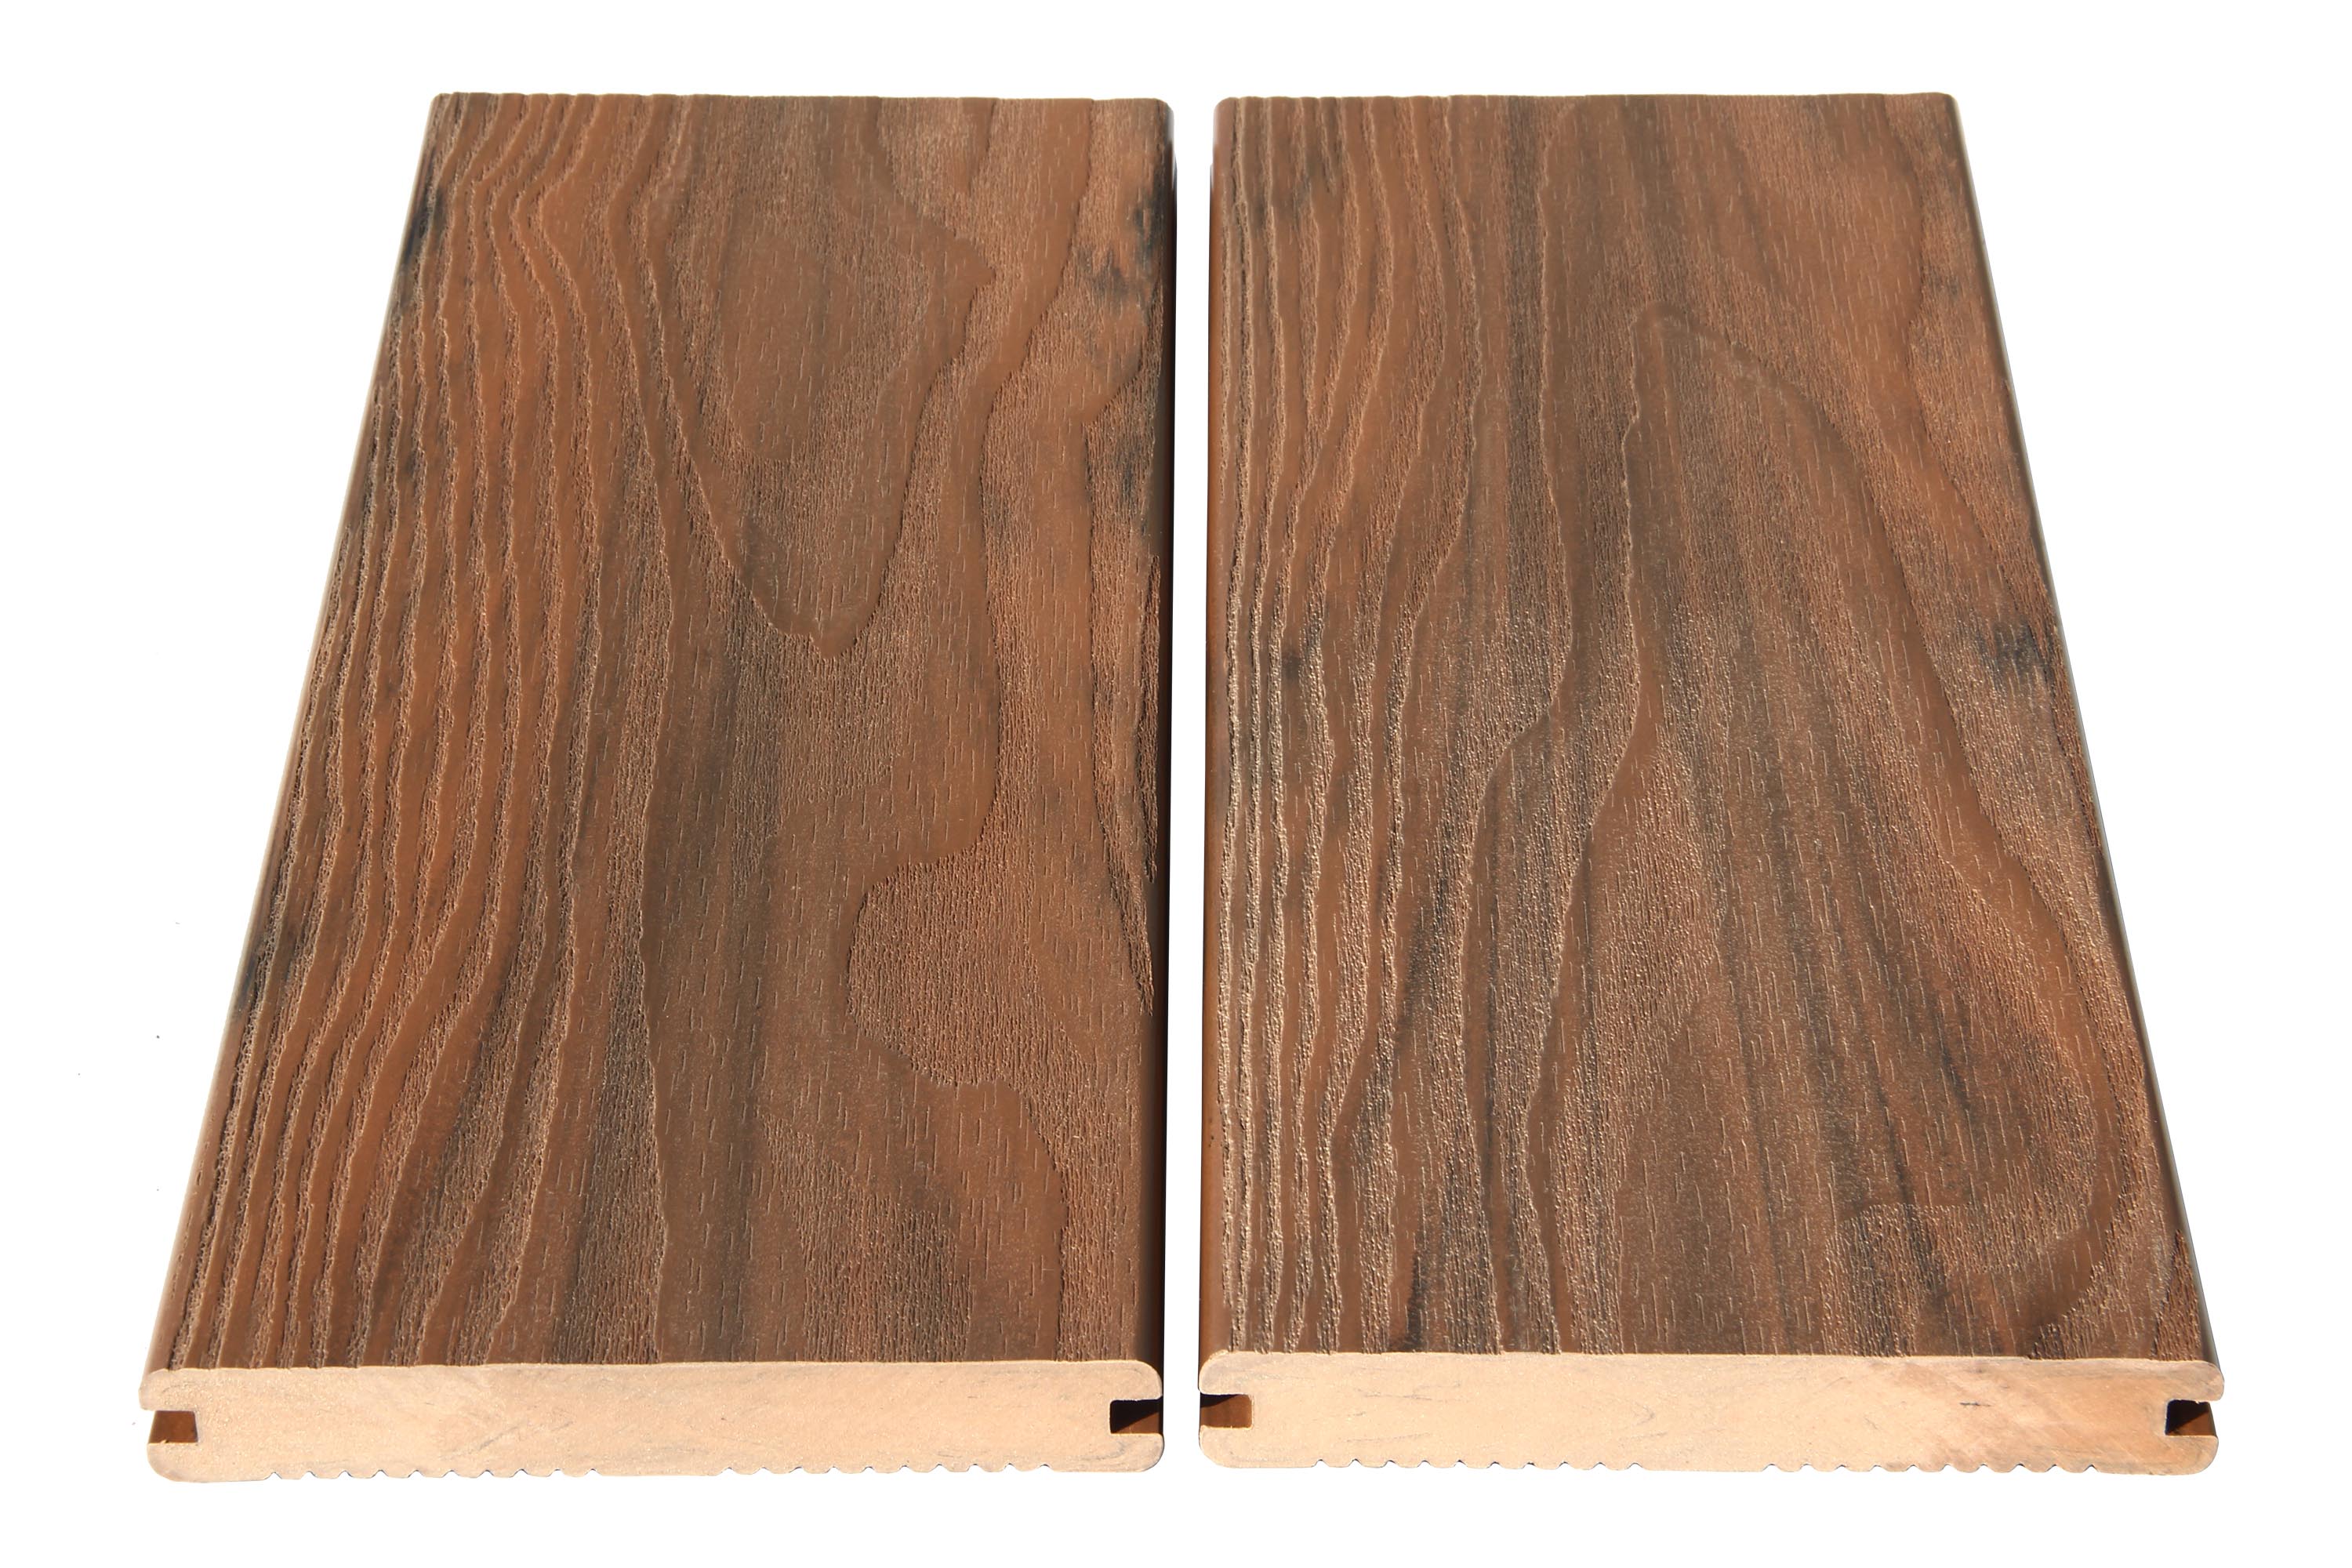 Thanh sàn gỗ Dgwood HDPE 3D Embossing DGW3DSD14021